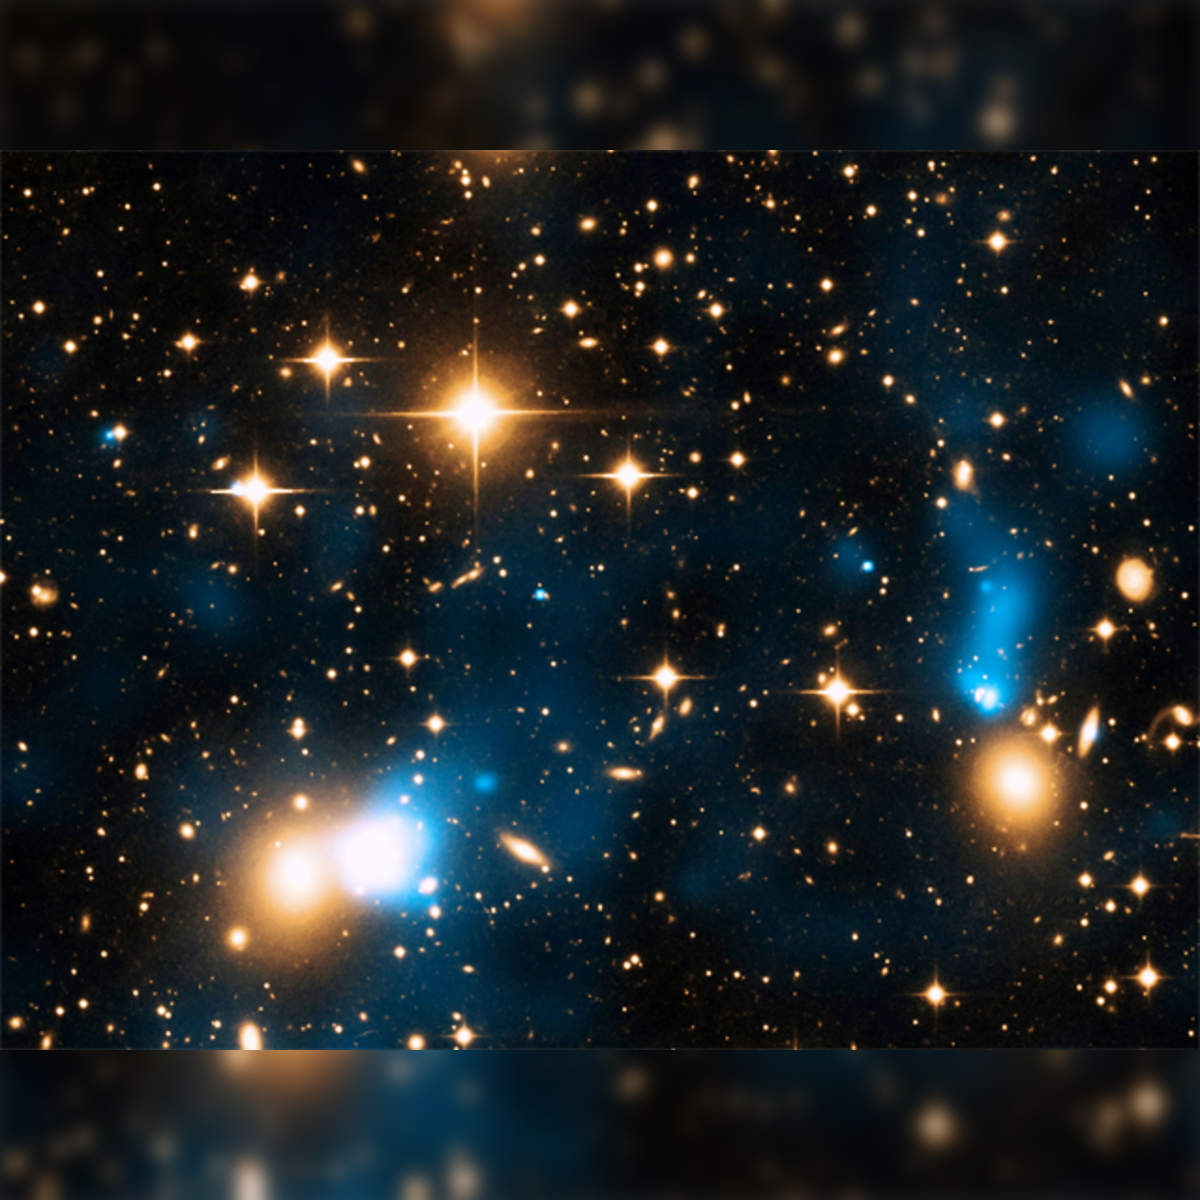 Stars Glitter Like Diamonds in Spectacular Hubble Telescope Photo